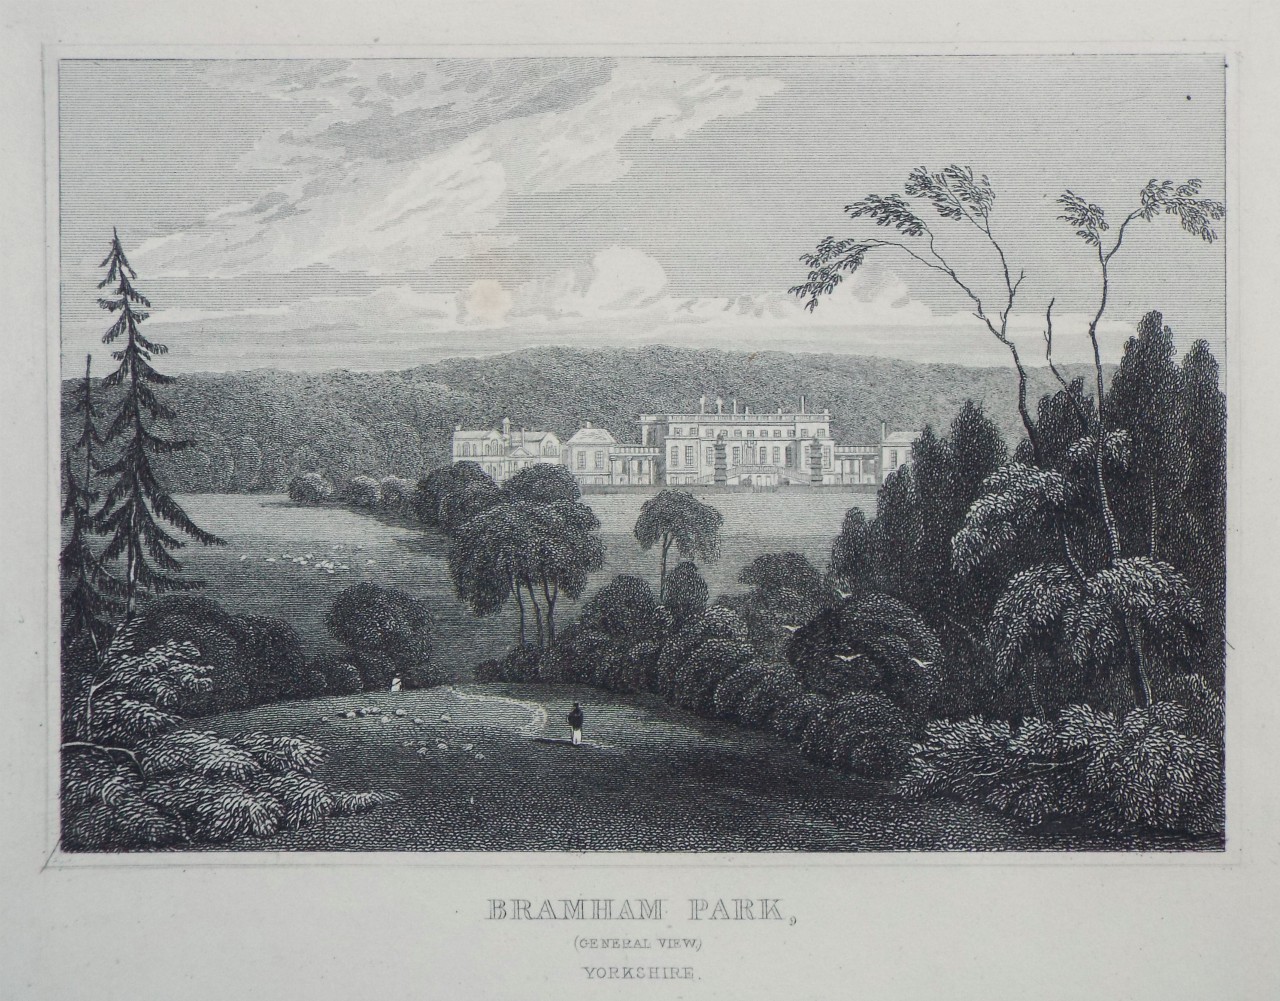 Print - Bramham Park, (General View) Yorkshire. - Radclyffe